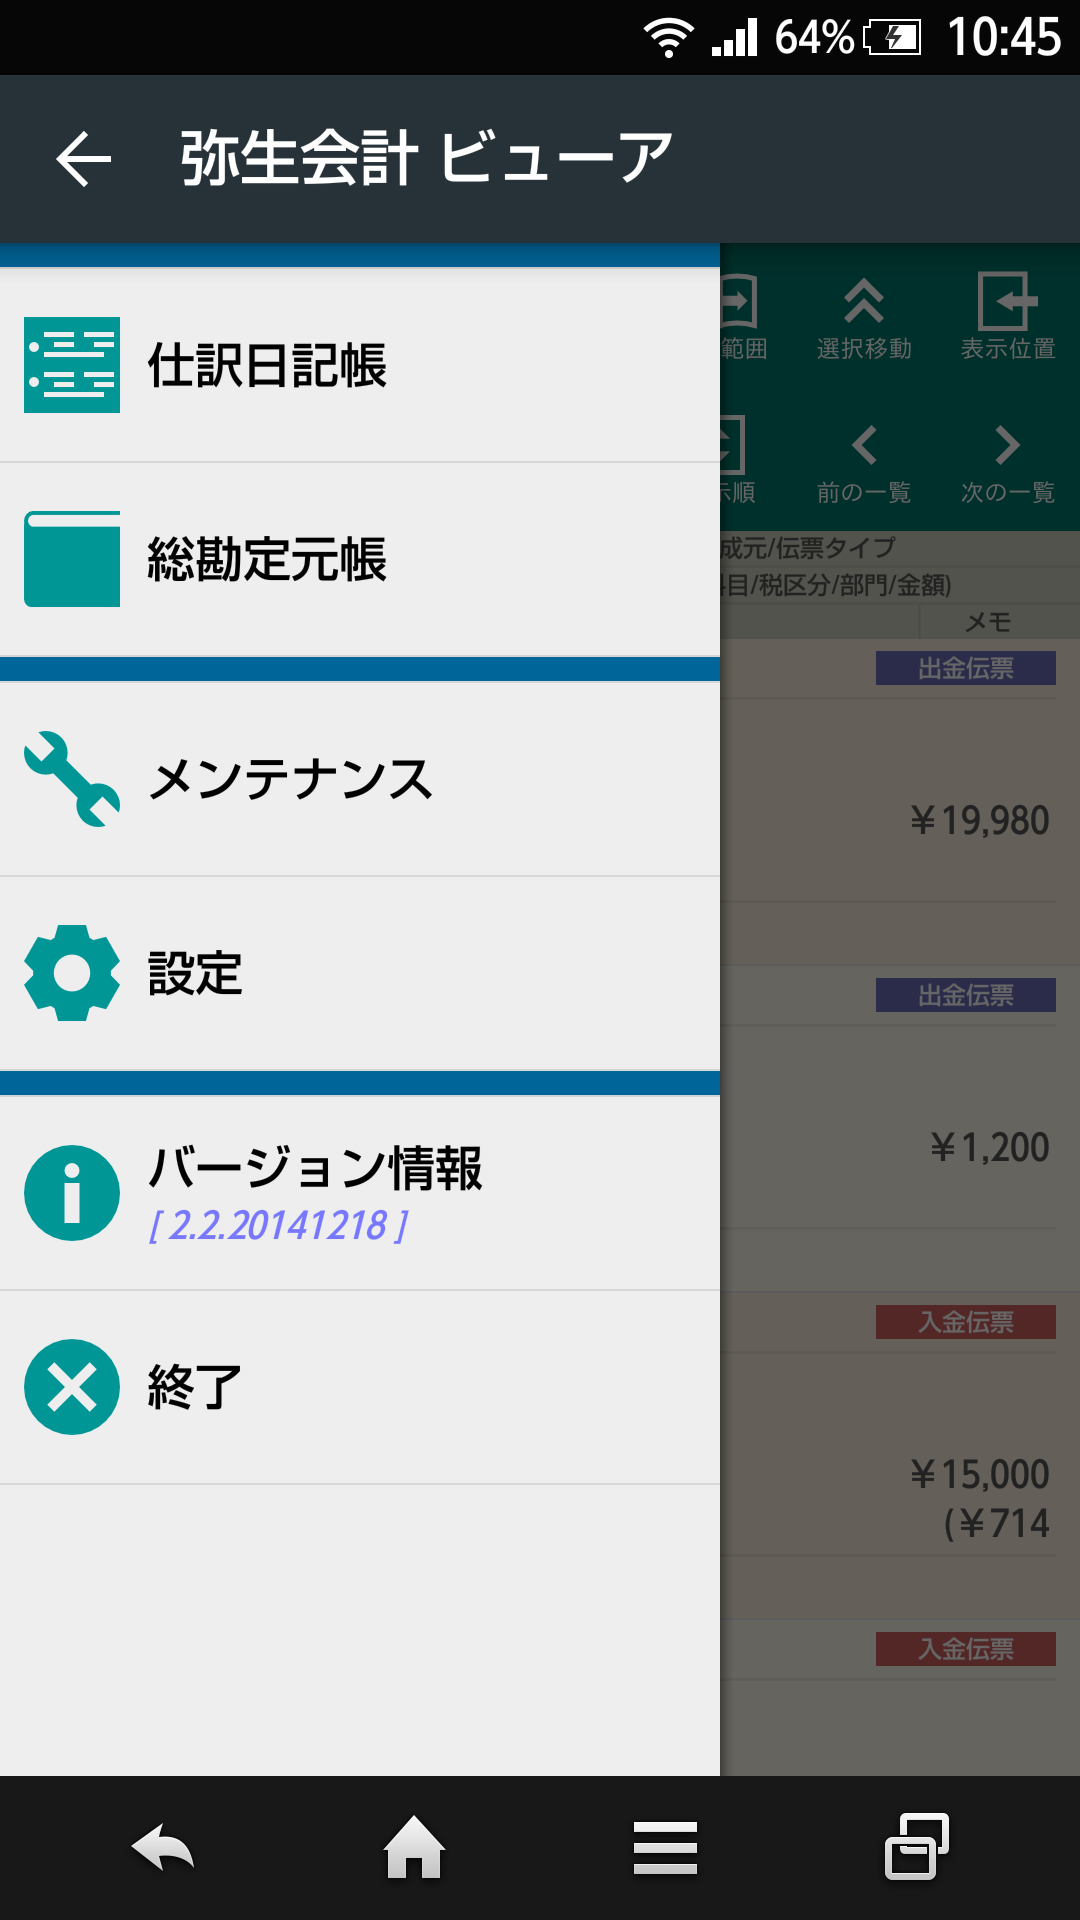 Android application 弥生会計 ビューア screenshort